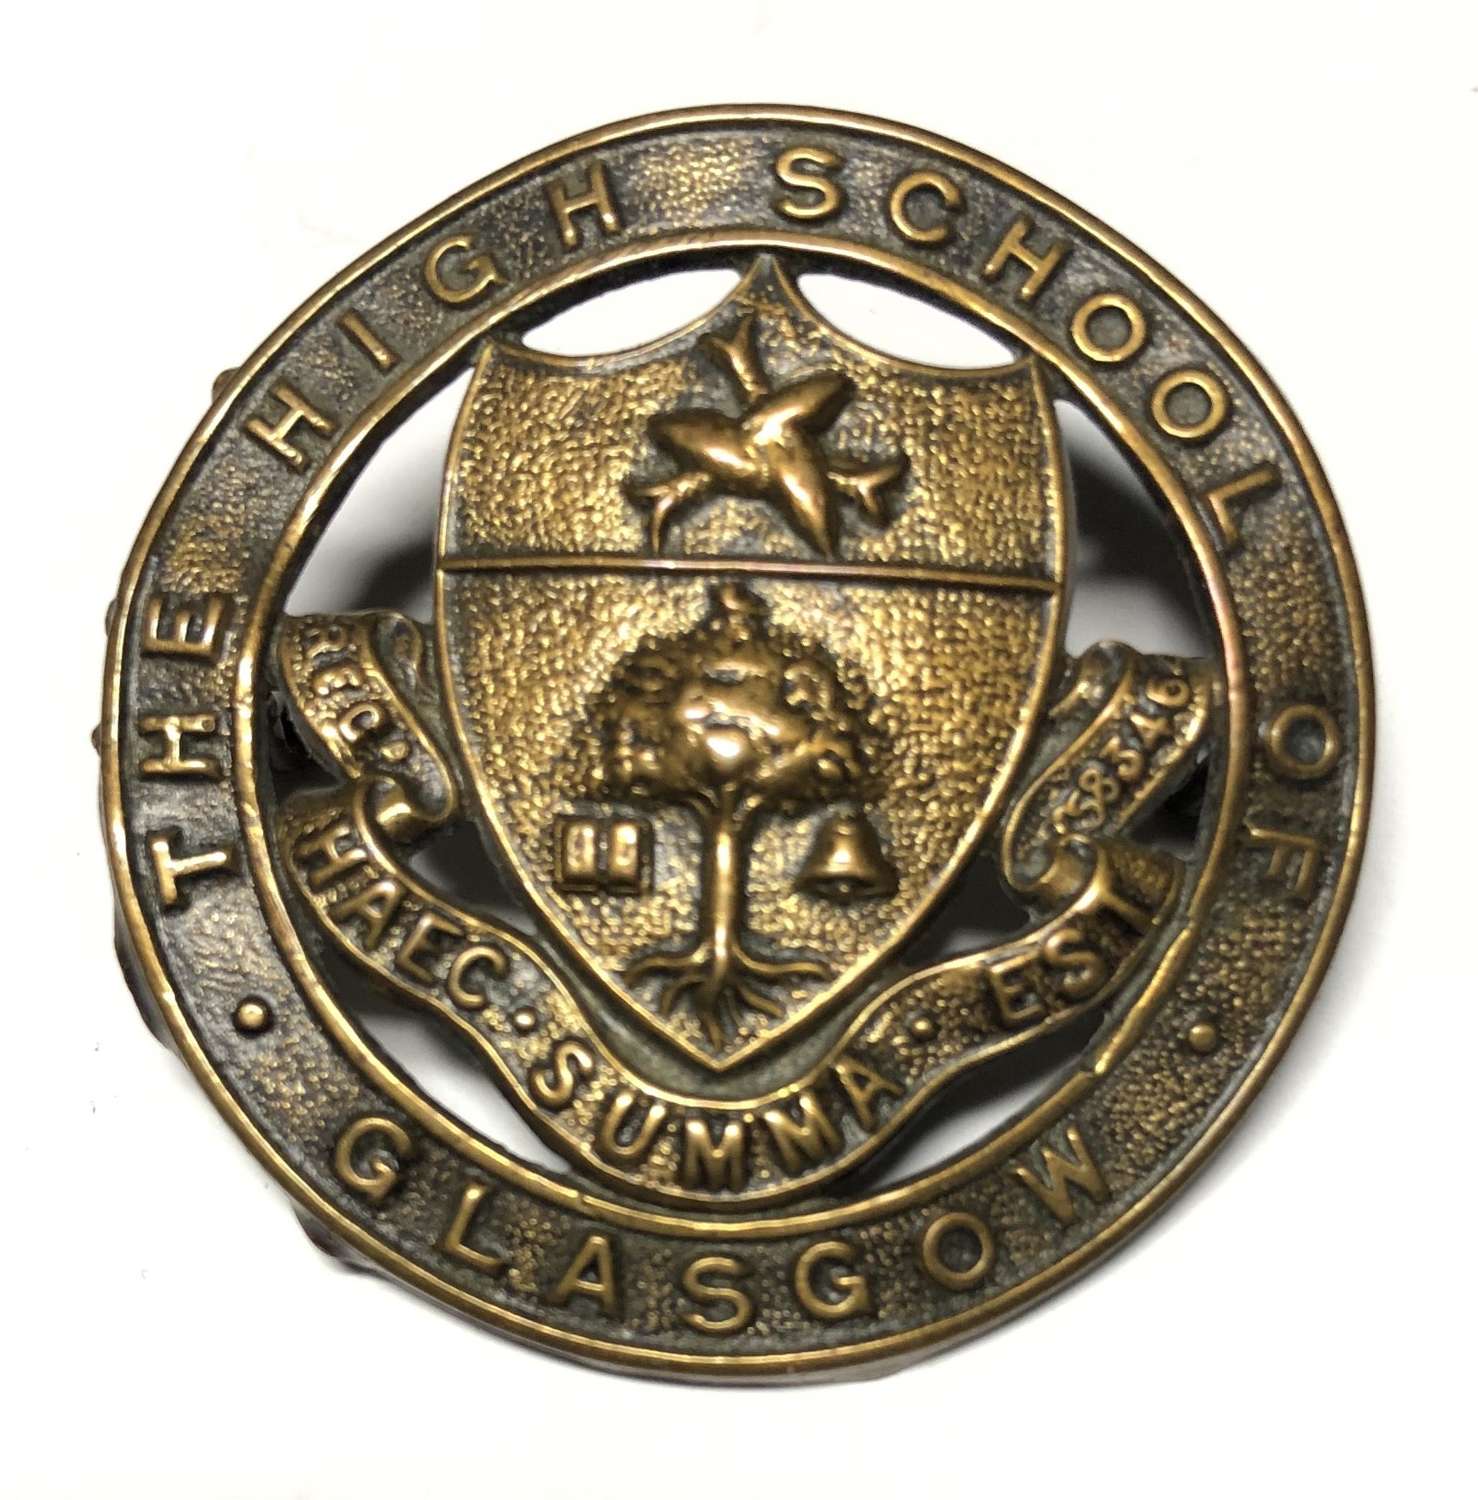 The High School of Glasgow cap badge